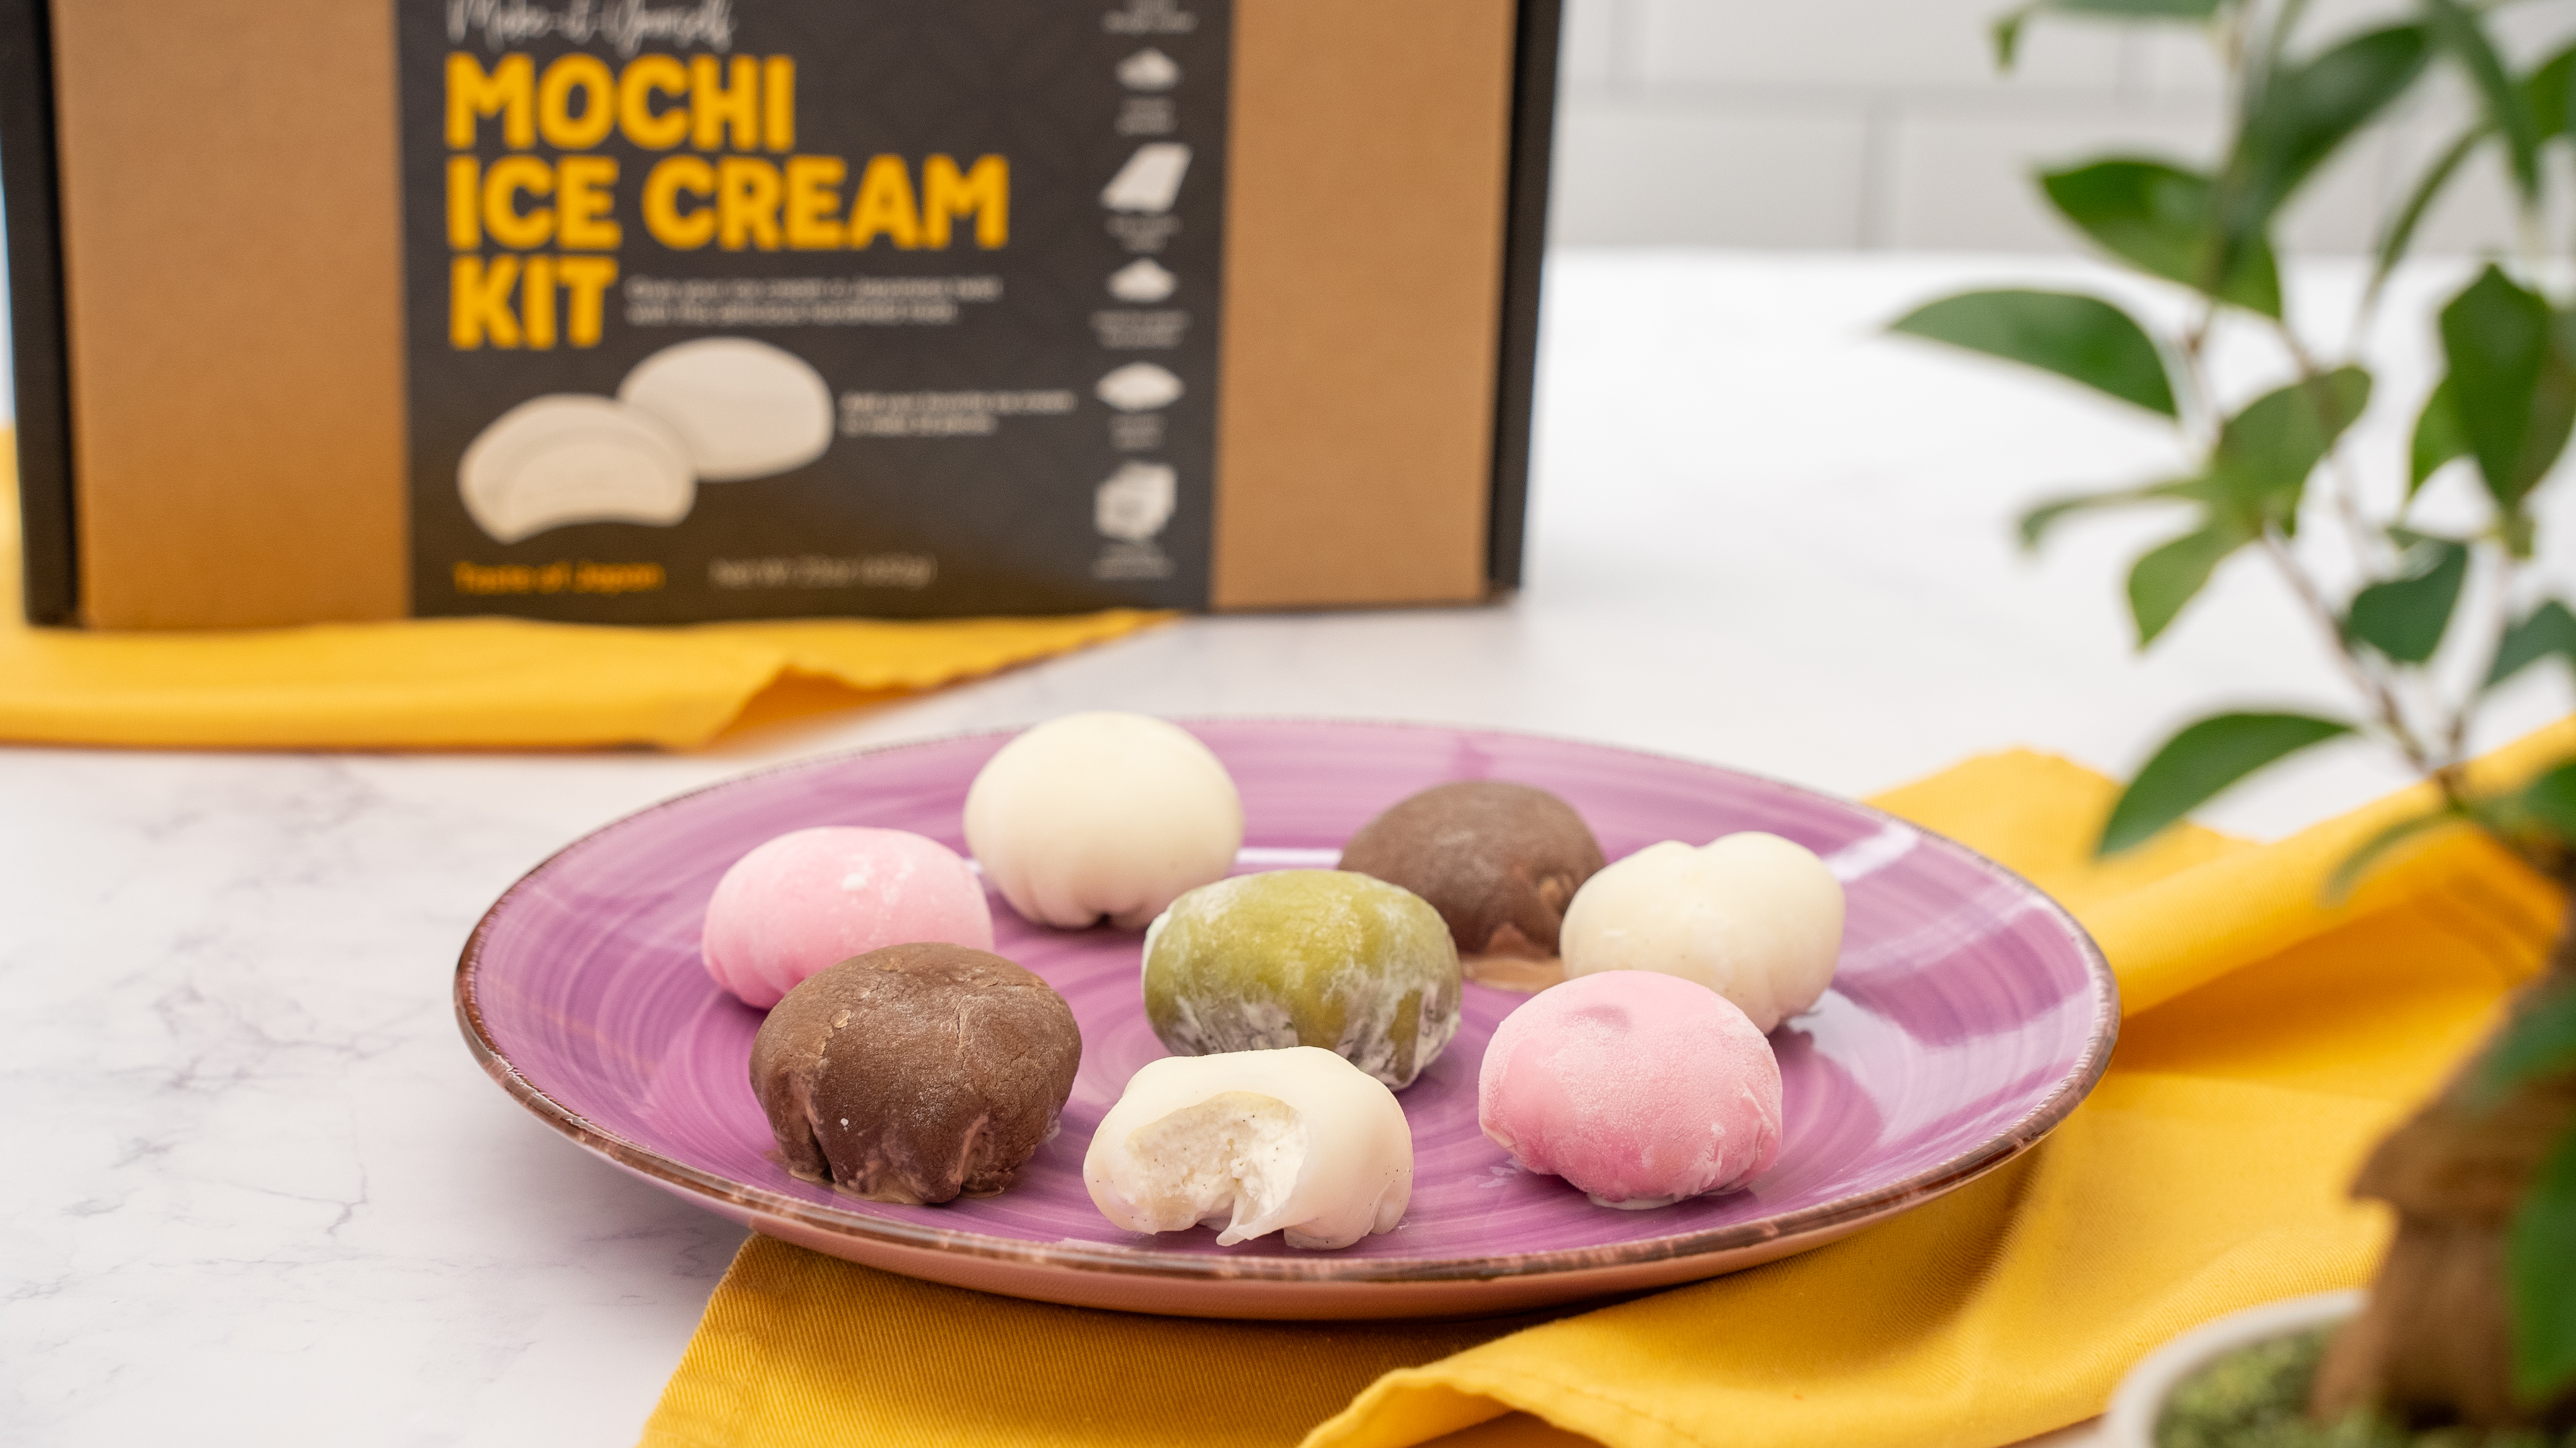 Global Grub Make-It-Yourself Mochi Ice Cream Kit New Japanese Ice